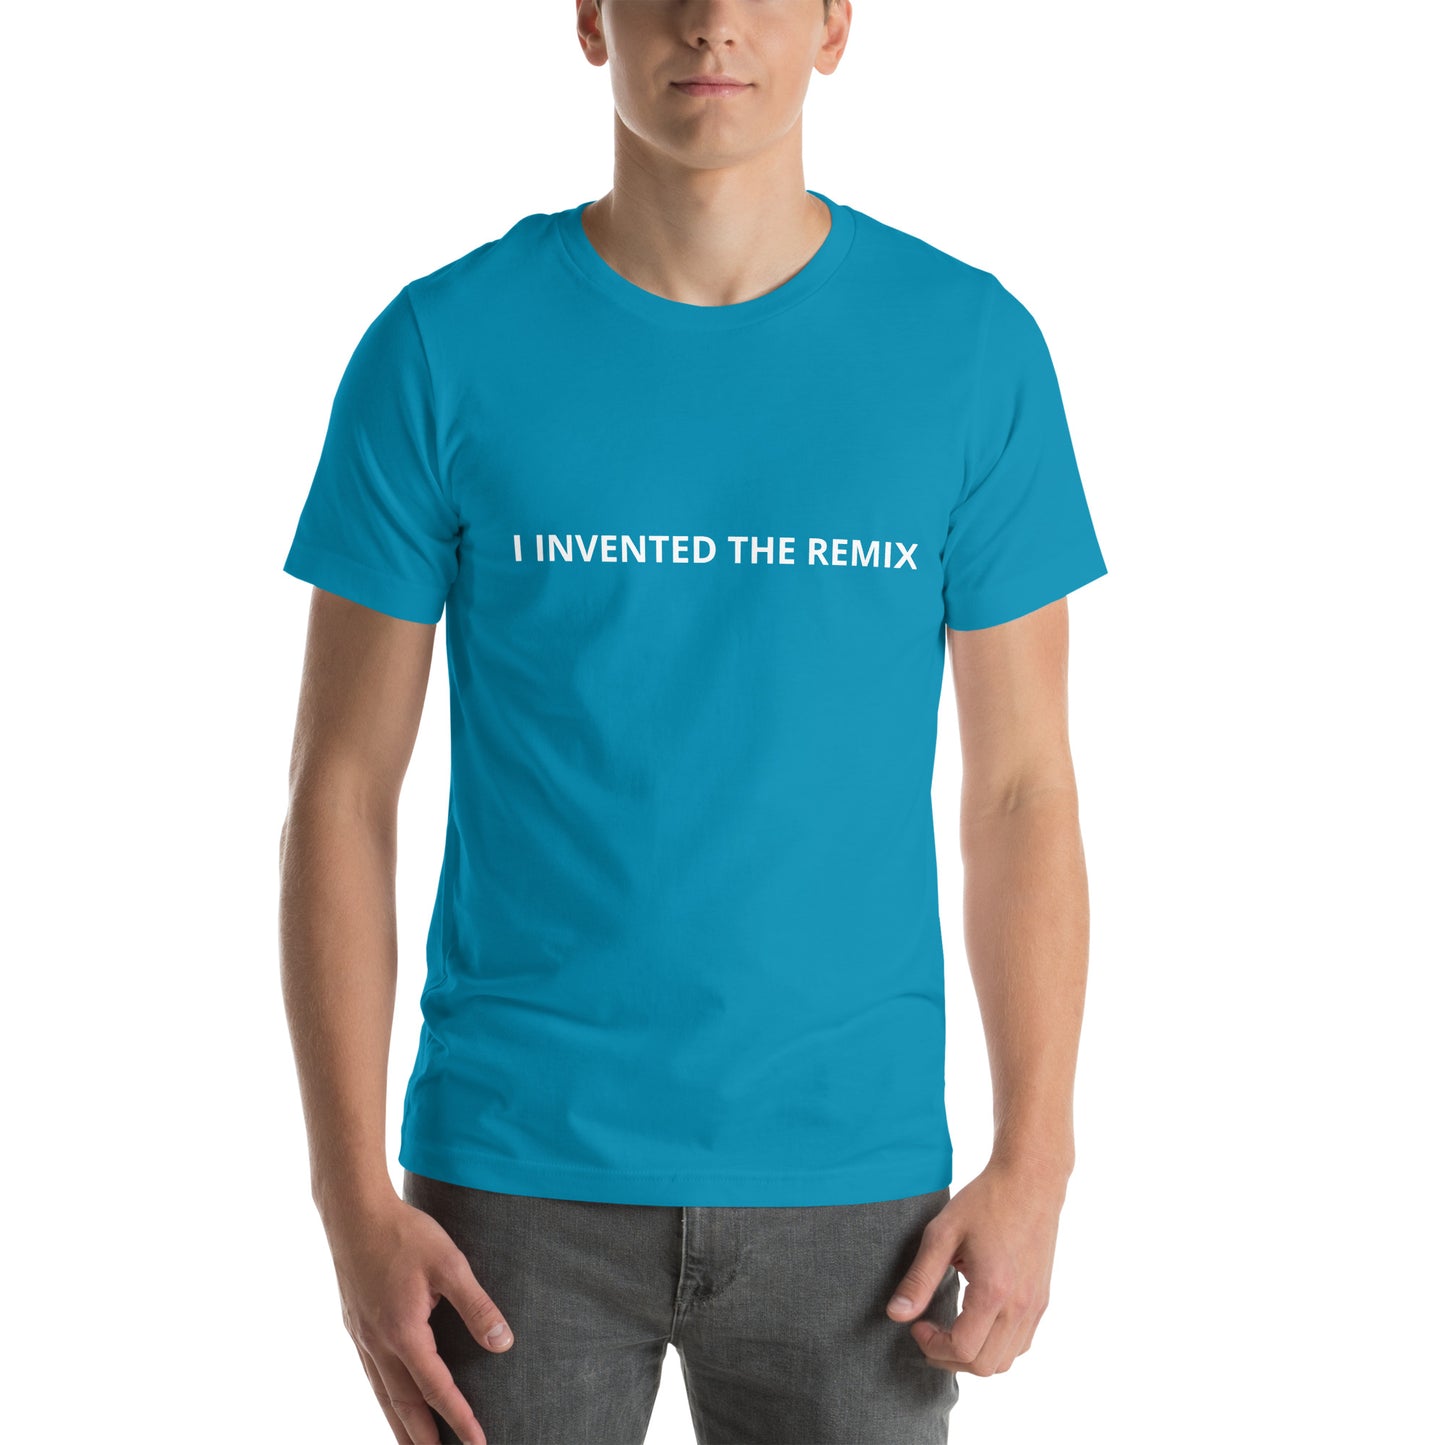 I INVENTED THE REMIX Unisex t-shirt